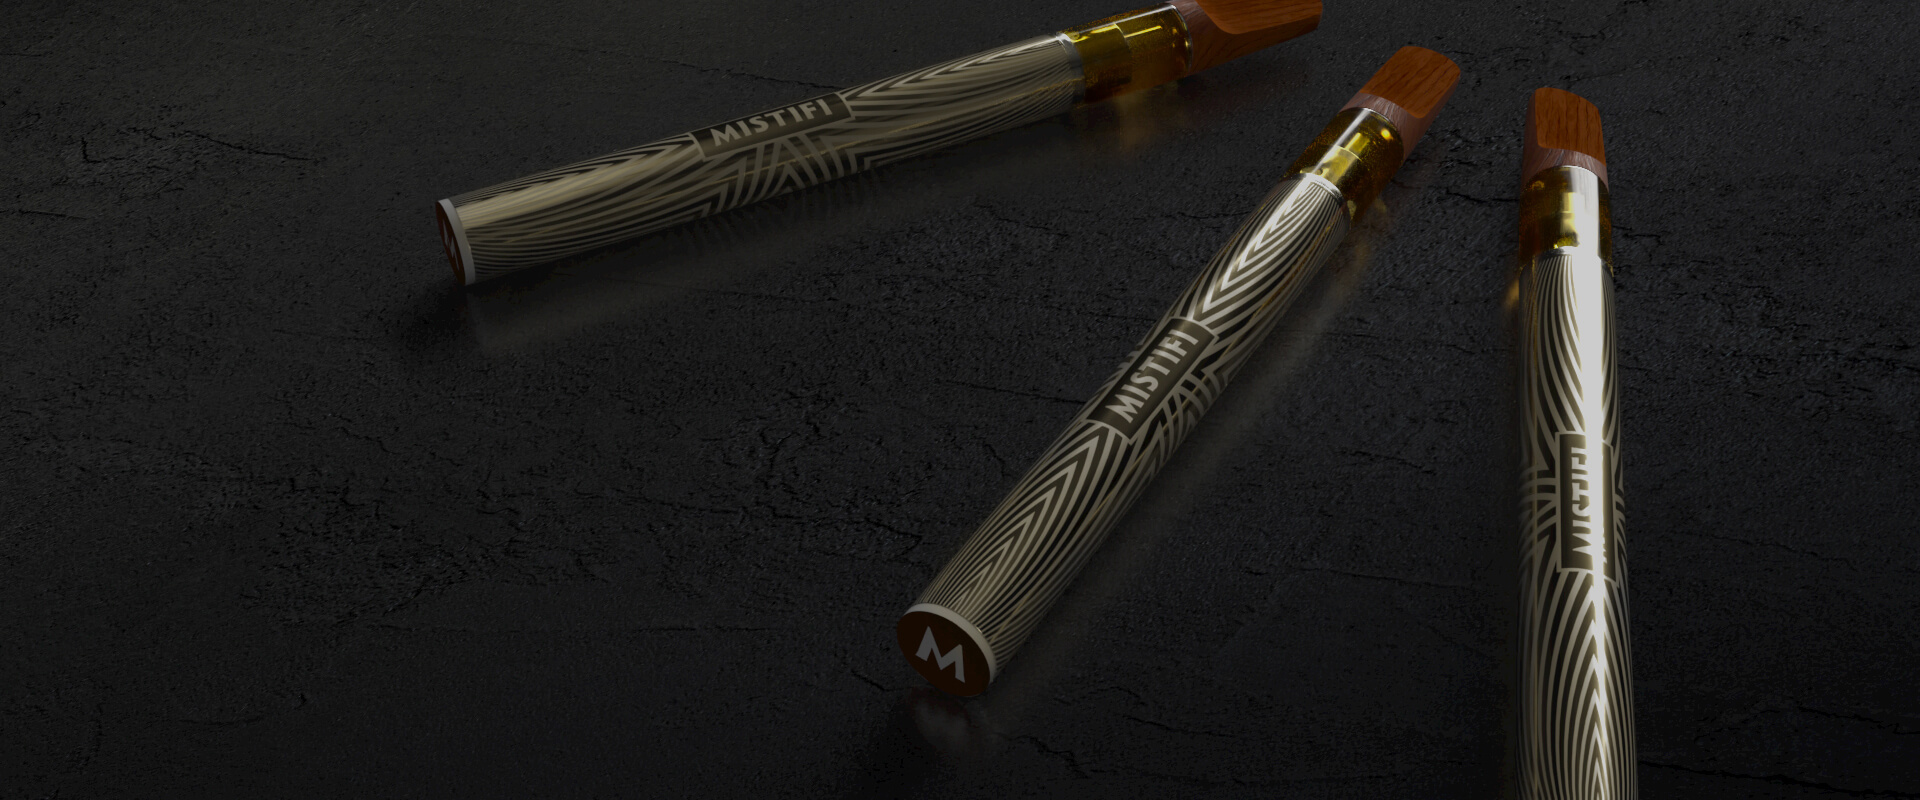 Three MISTIFI Premium Cannabis Vape Pens on dark background